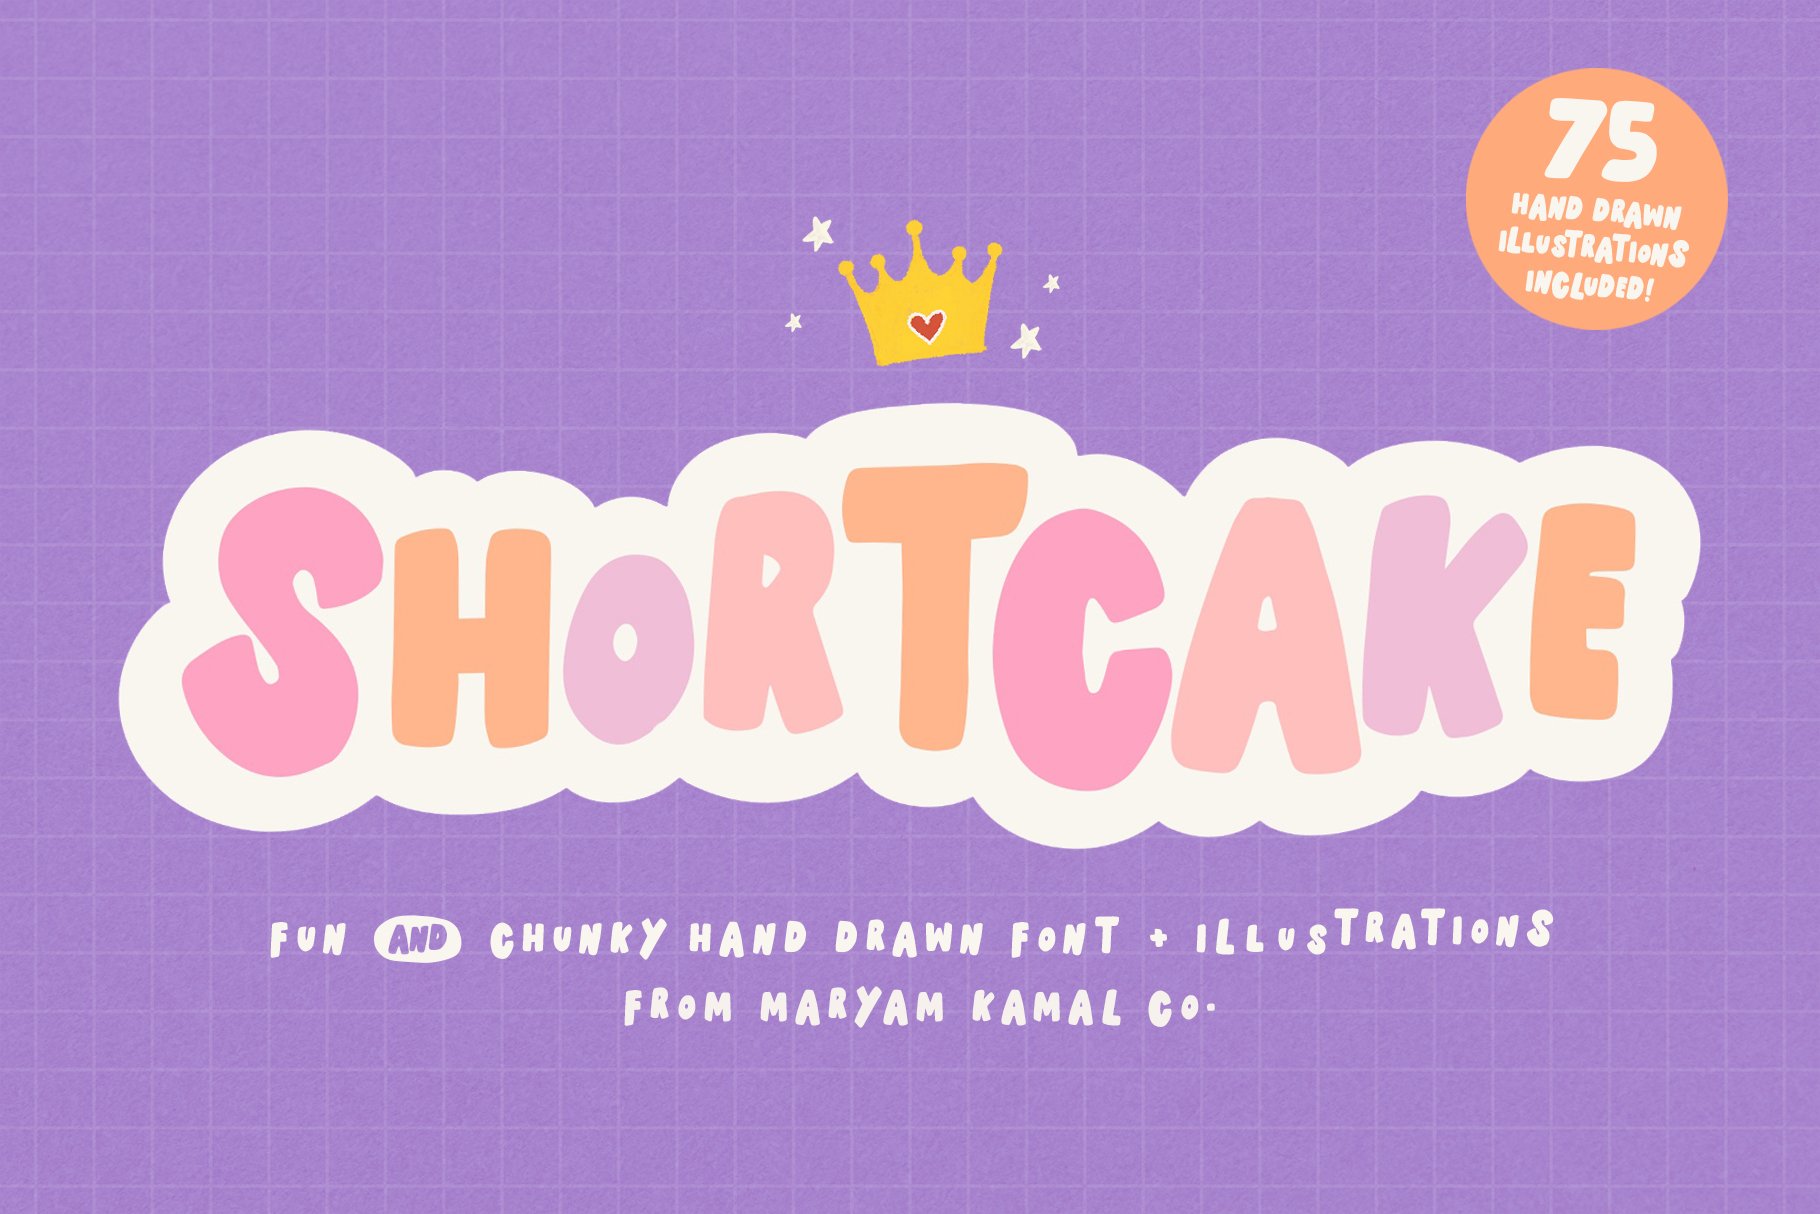 Shortcake Playful Font & Graphics cover image.